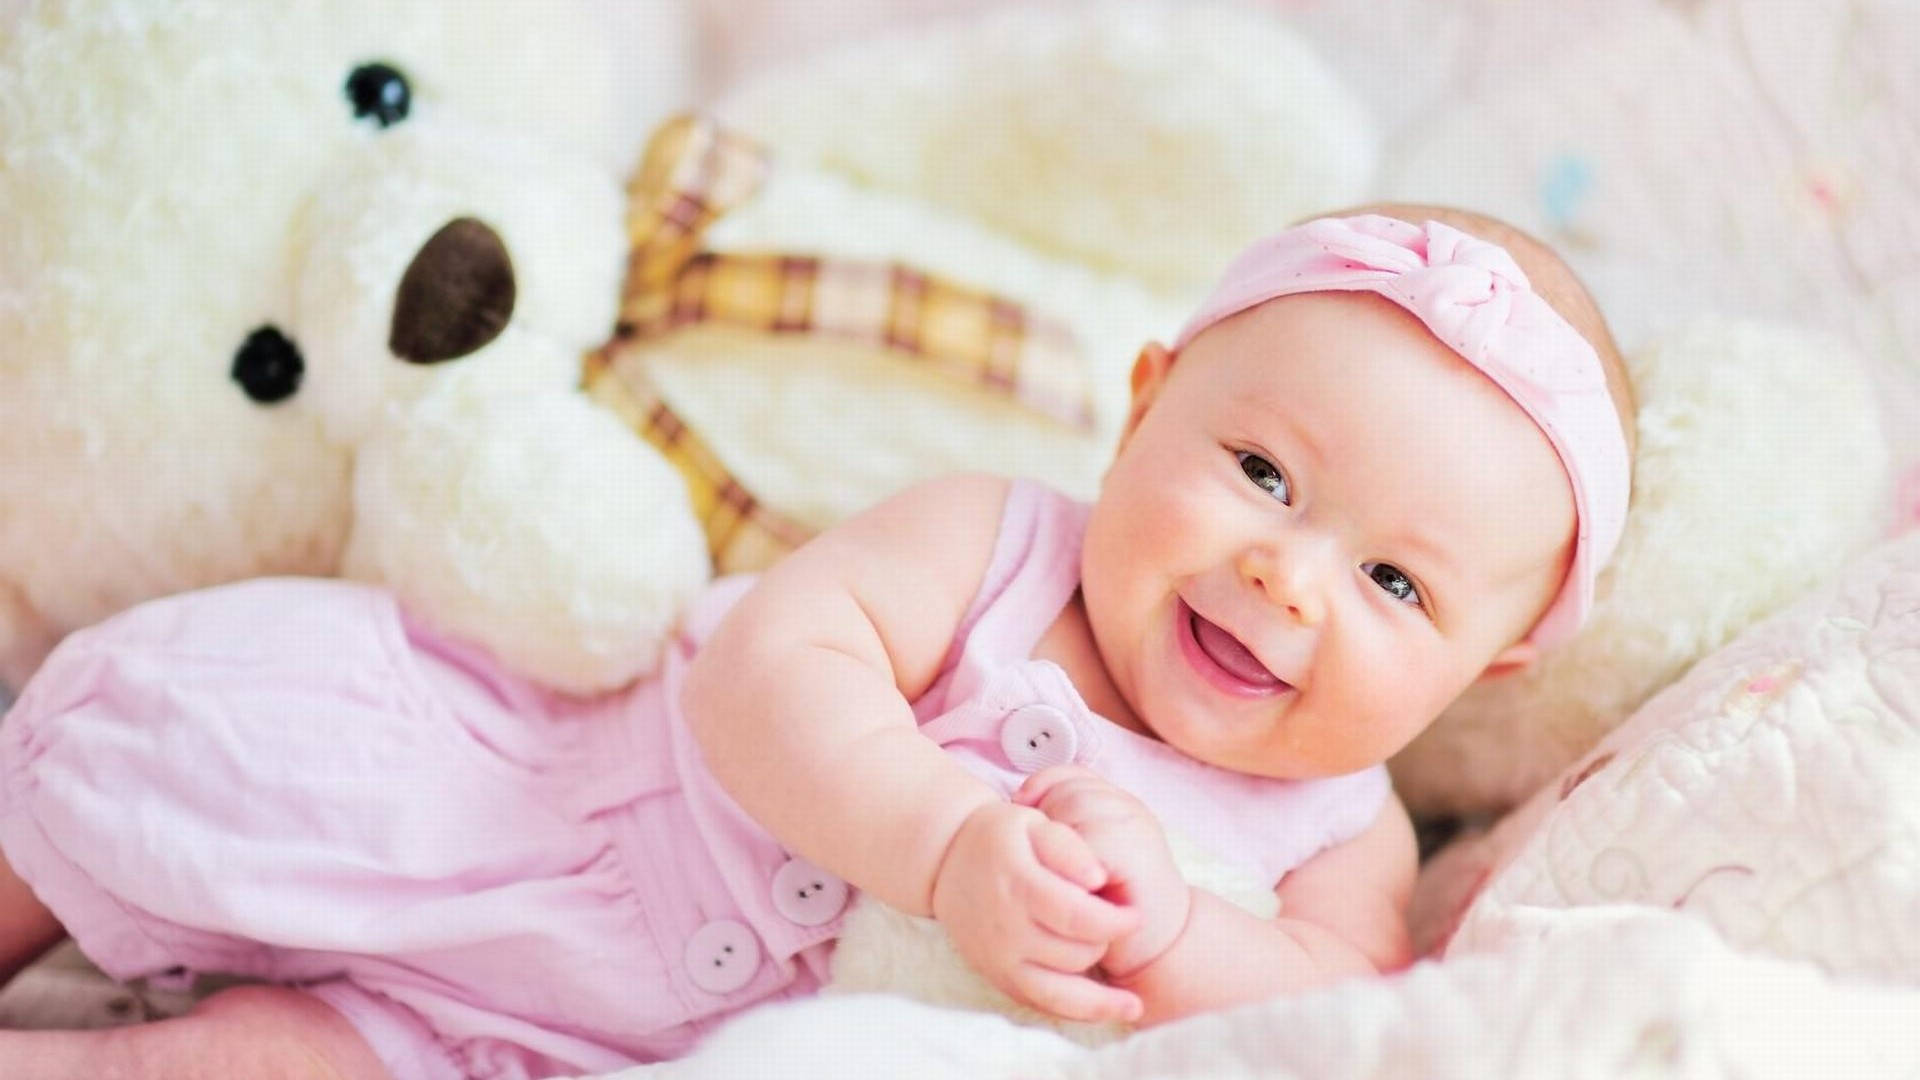 Free Very Cute Baby Wallpaper Downloads, [100+] Very Cute Baby Wallpapers  for FREE 